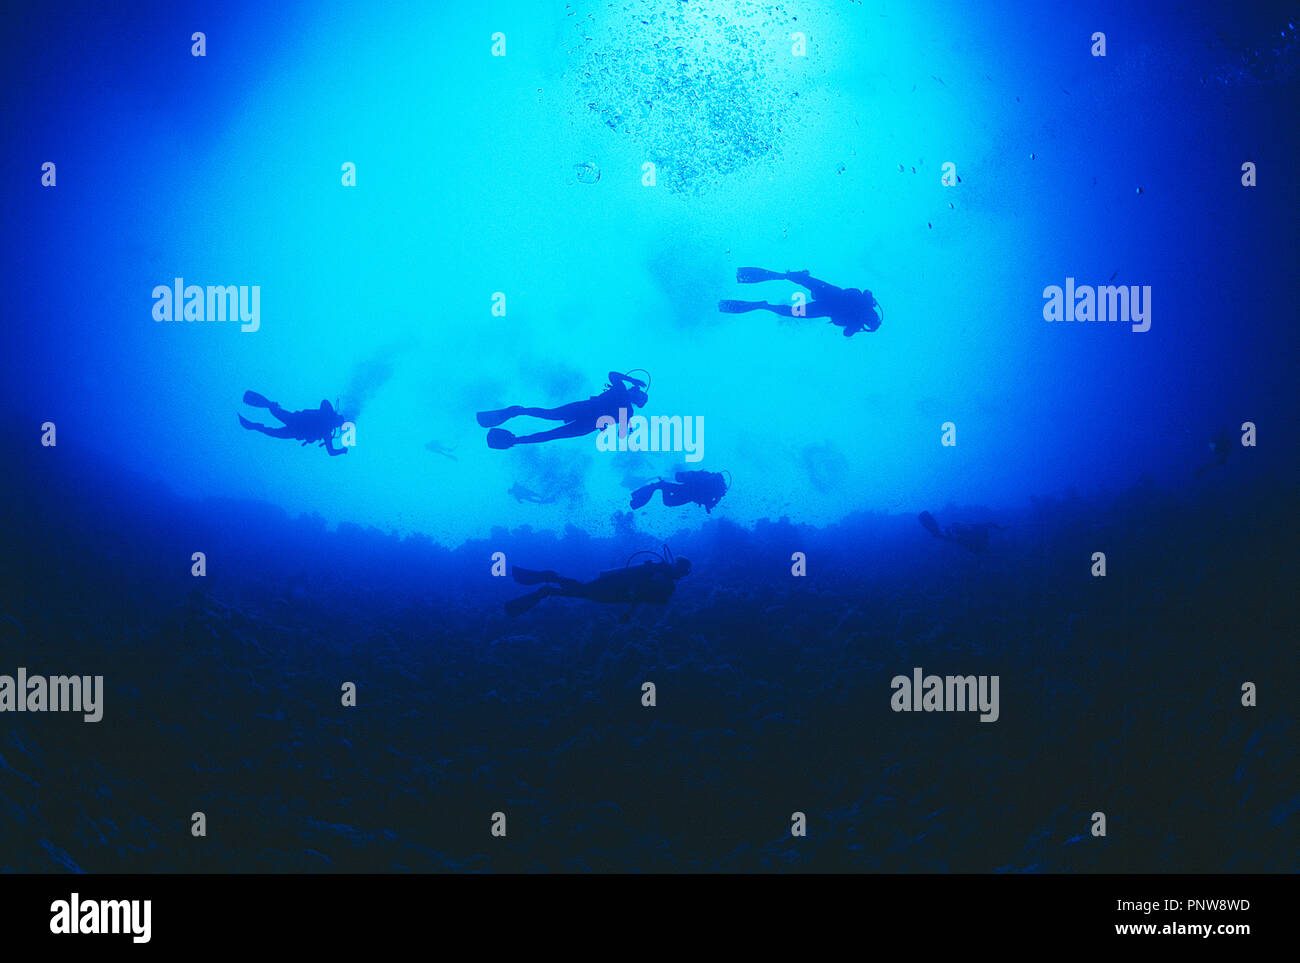 Buzos de mar profundo fotografías e imágenes de alta resolución - Alamy